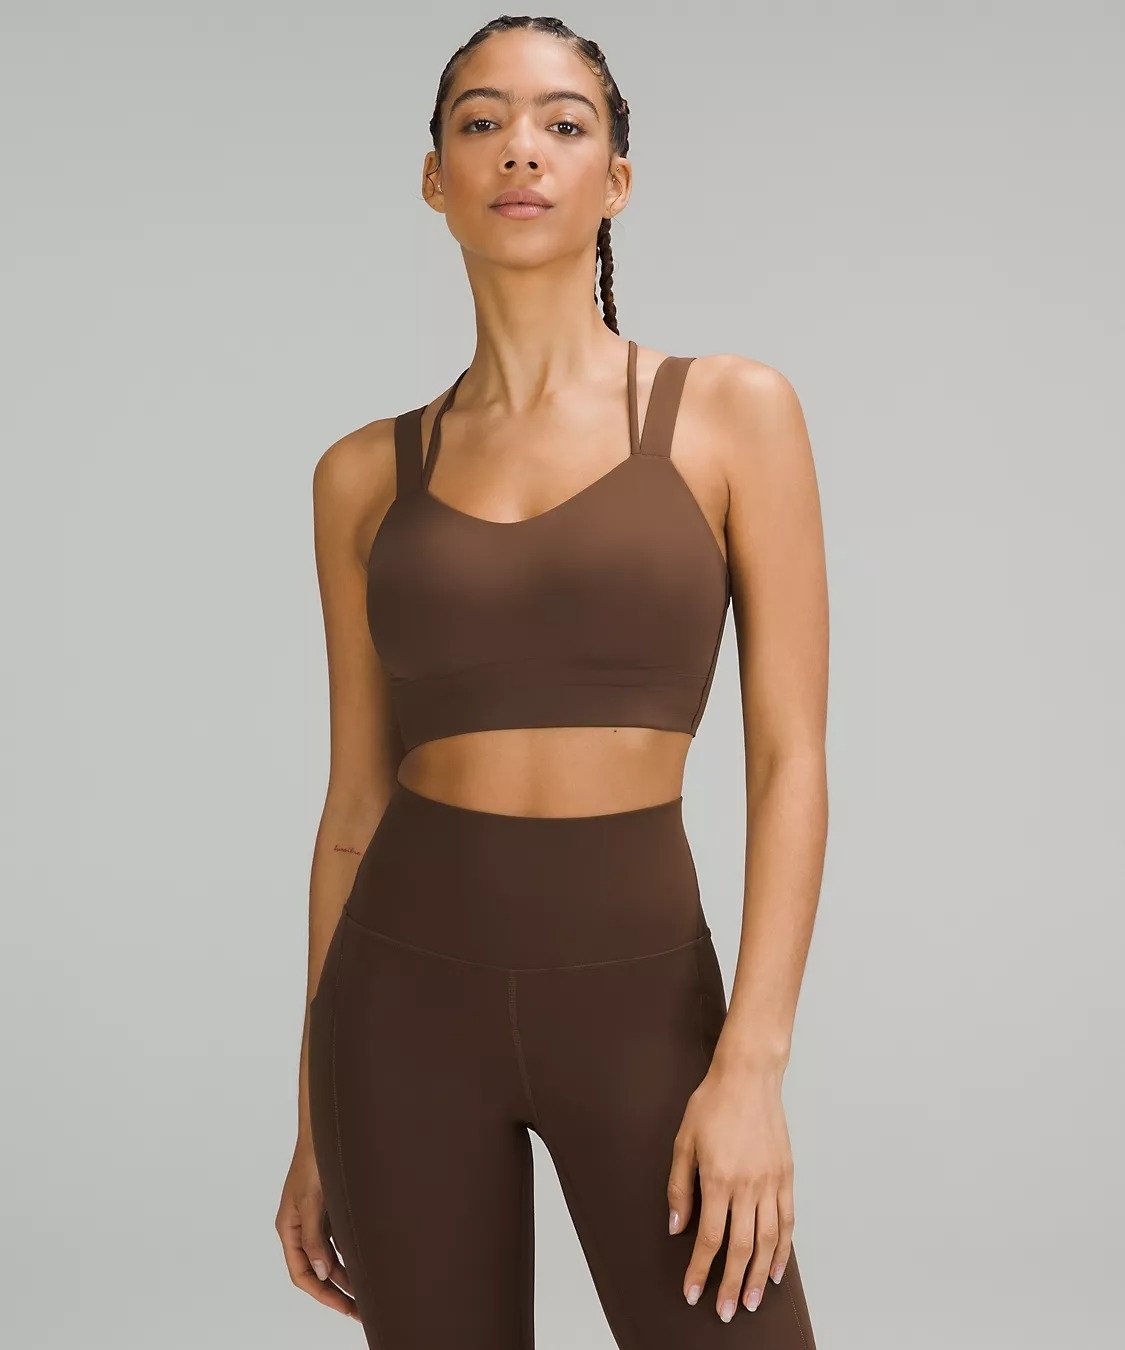 Model wearing a brown sweat-wicking sports bra and matching leggings